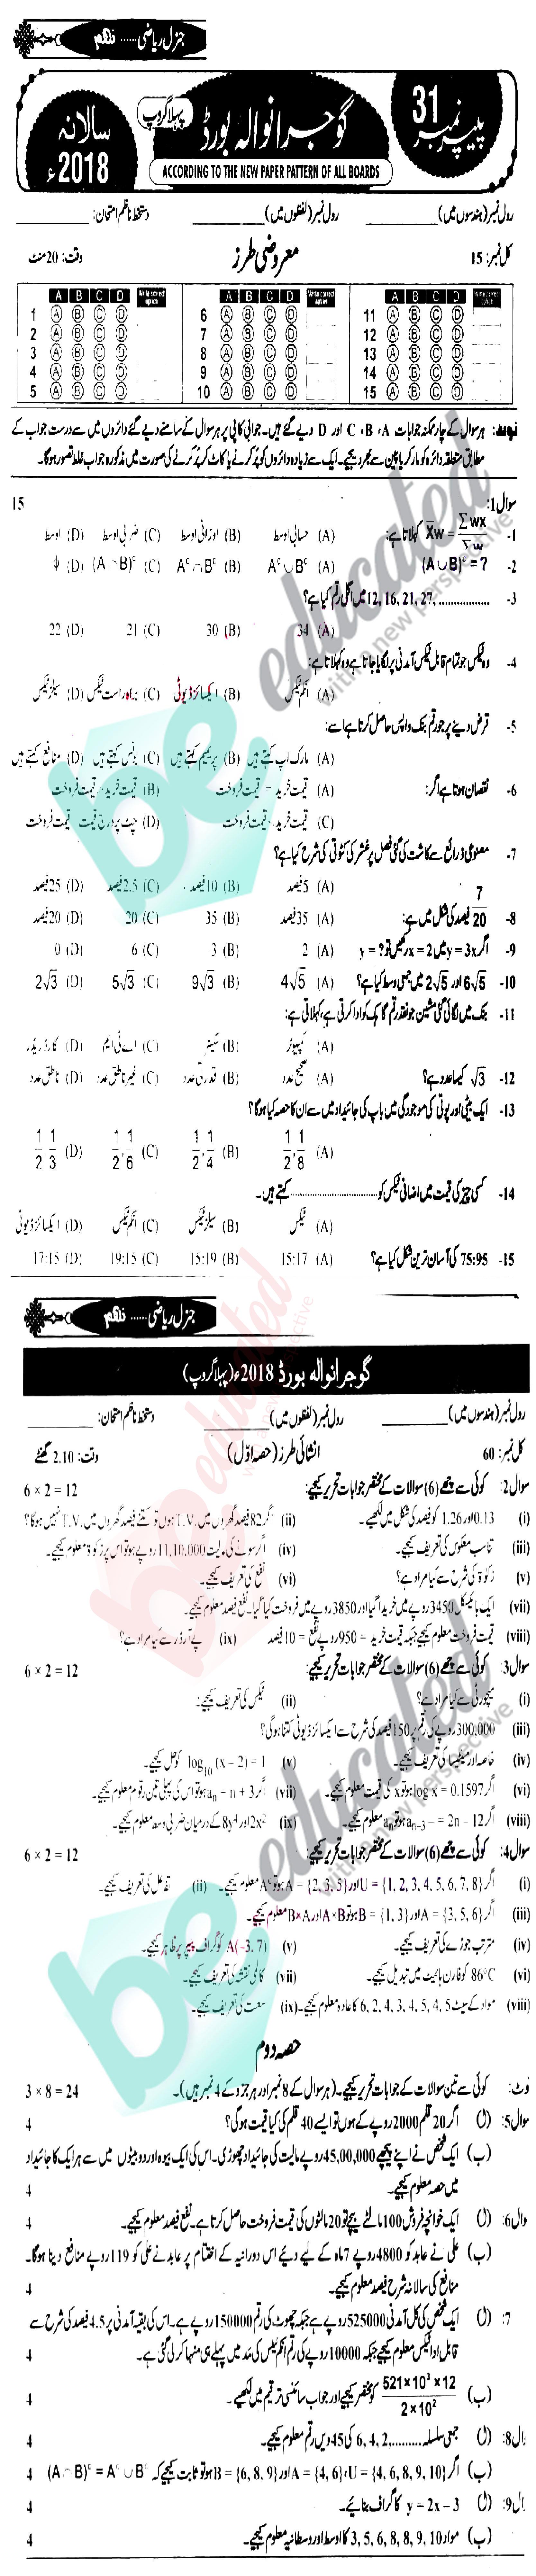 General Math 9th Urdu Medium Past Paper Group 1 BISE Gujranwala 2018